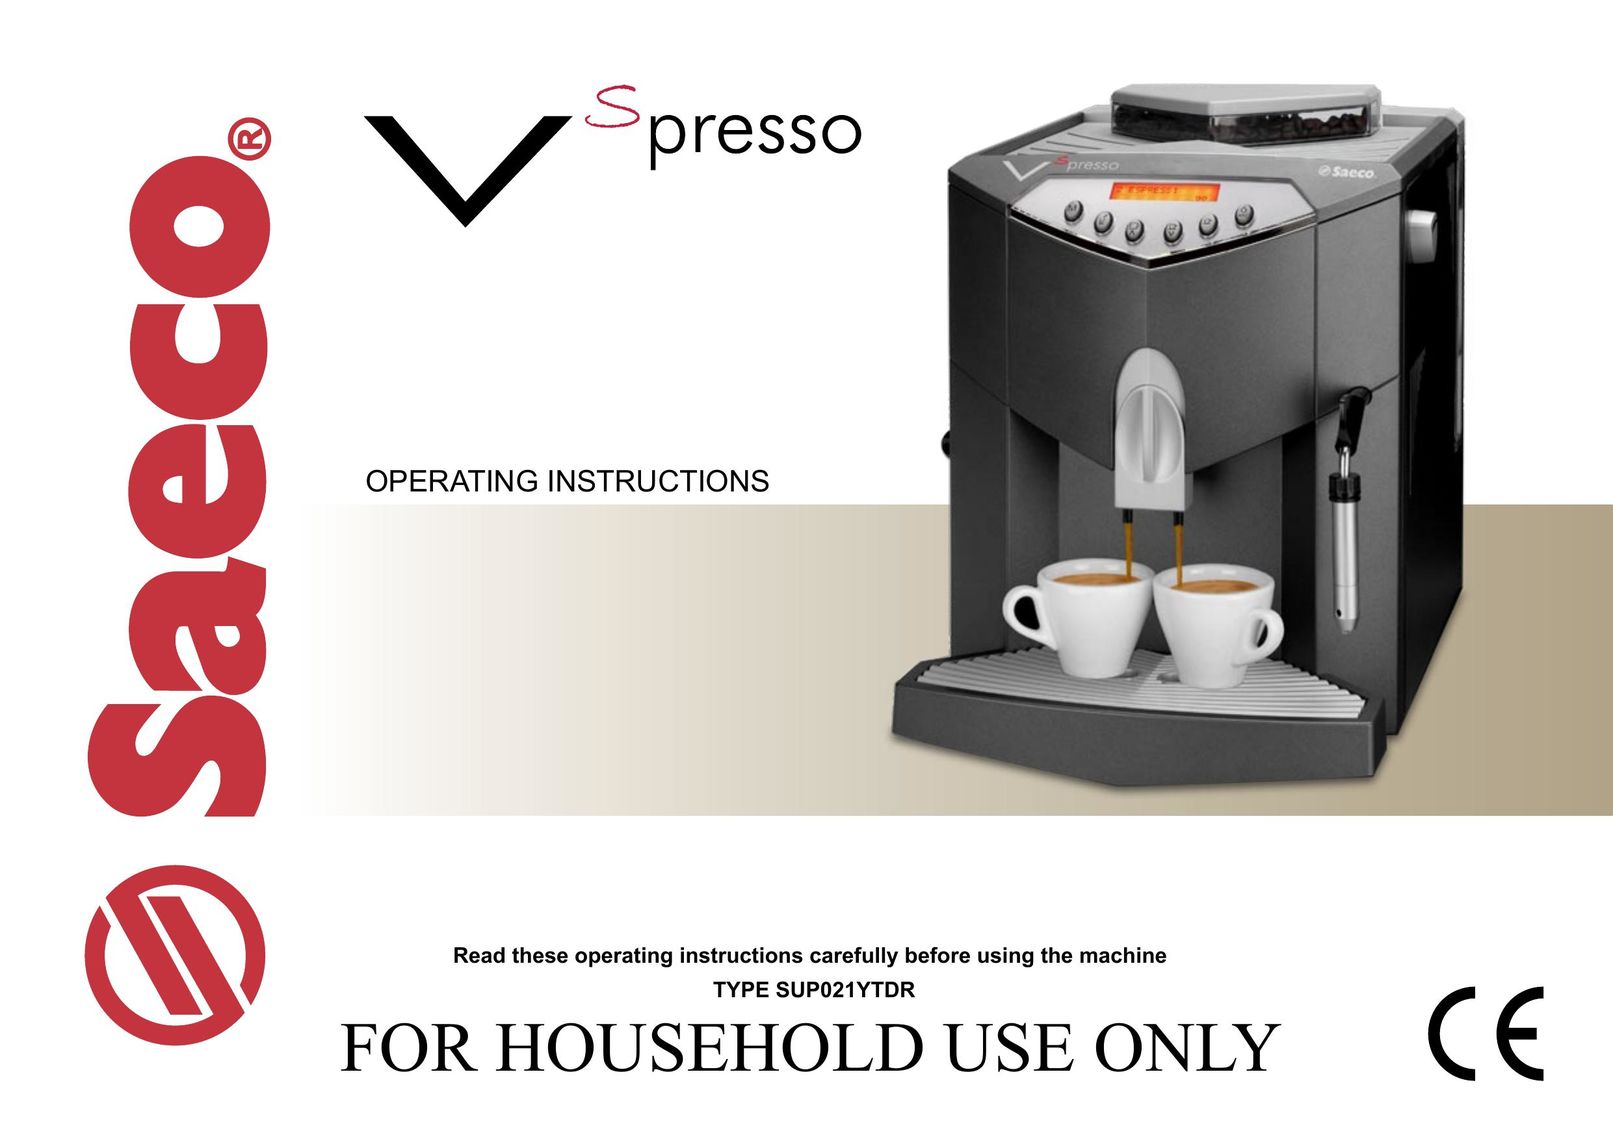 Saeco Coffee Makers V-spresso Coffeemaker User Manual